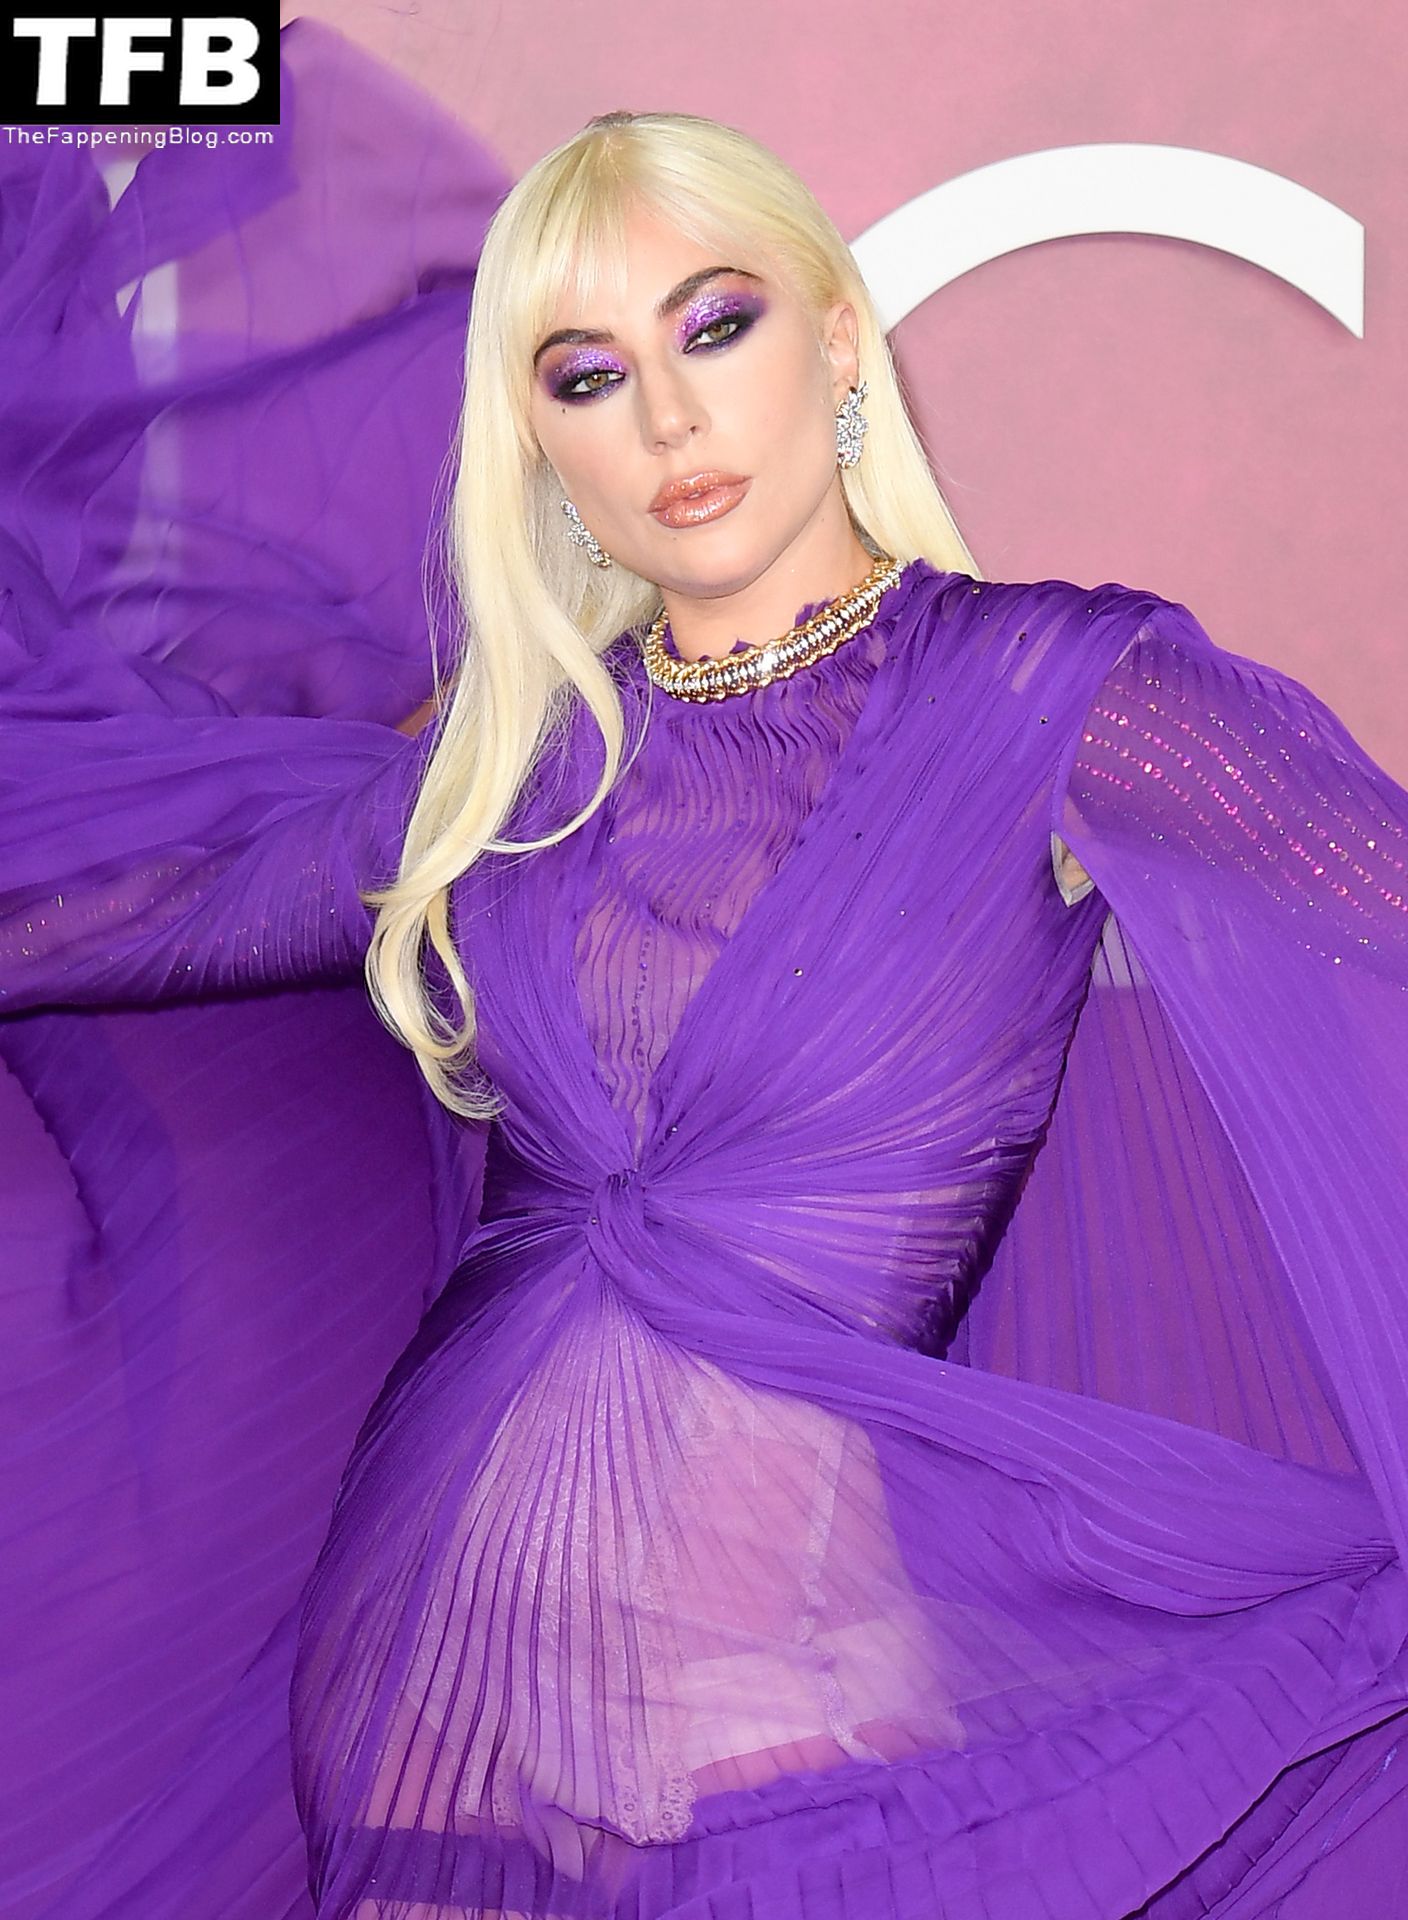 Lady-Gaga-Sexy-The-Fappening-Blog-113.jpg